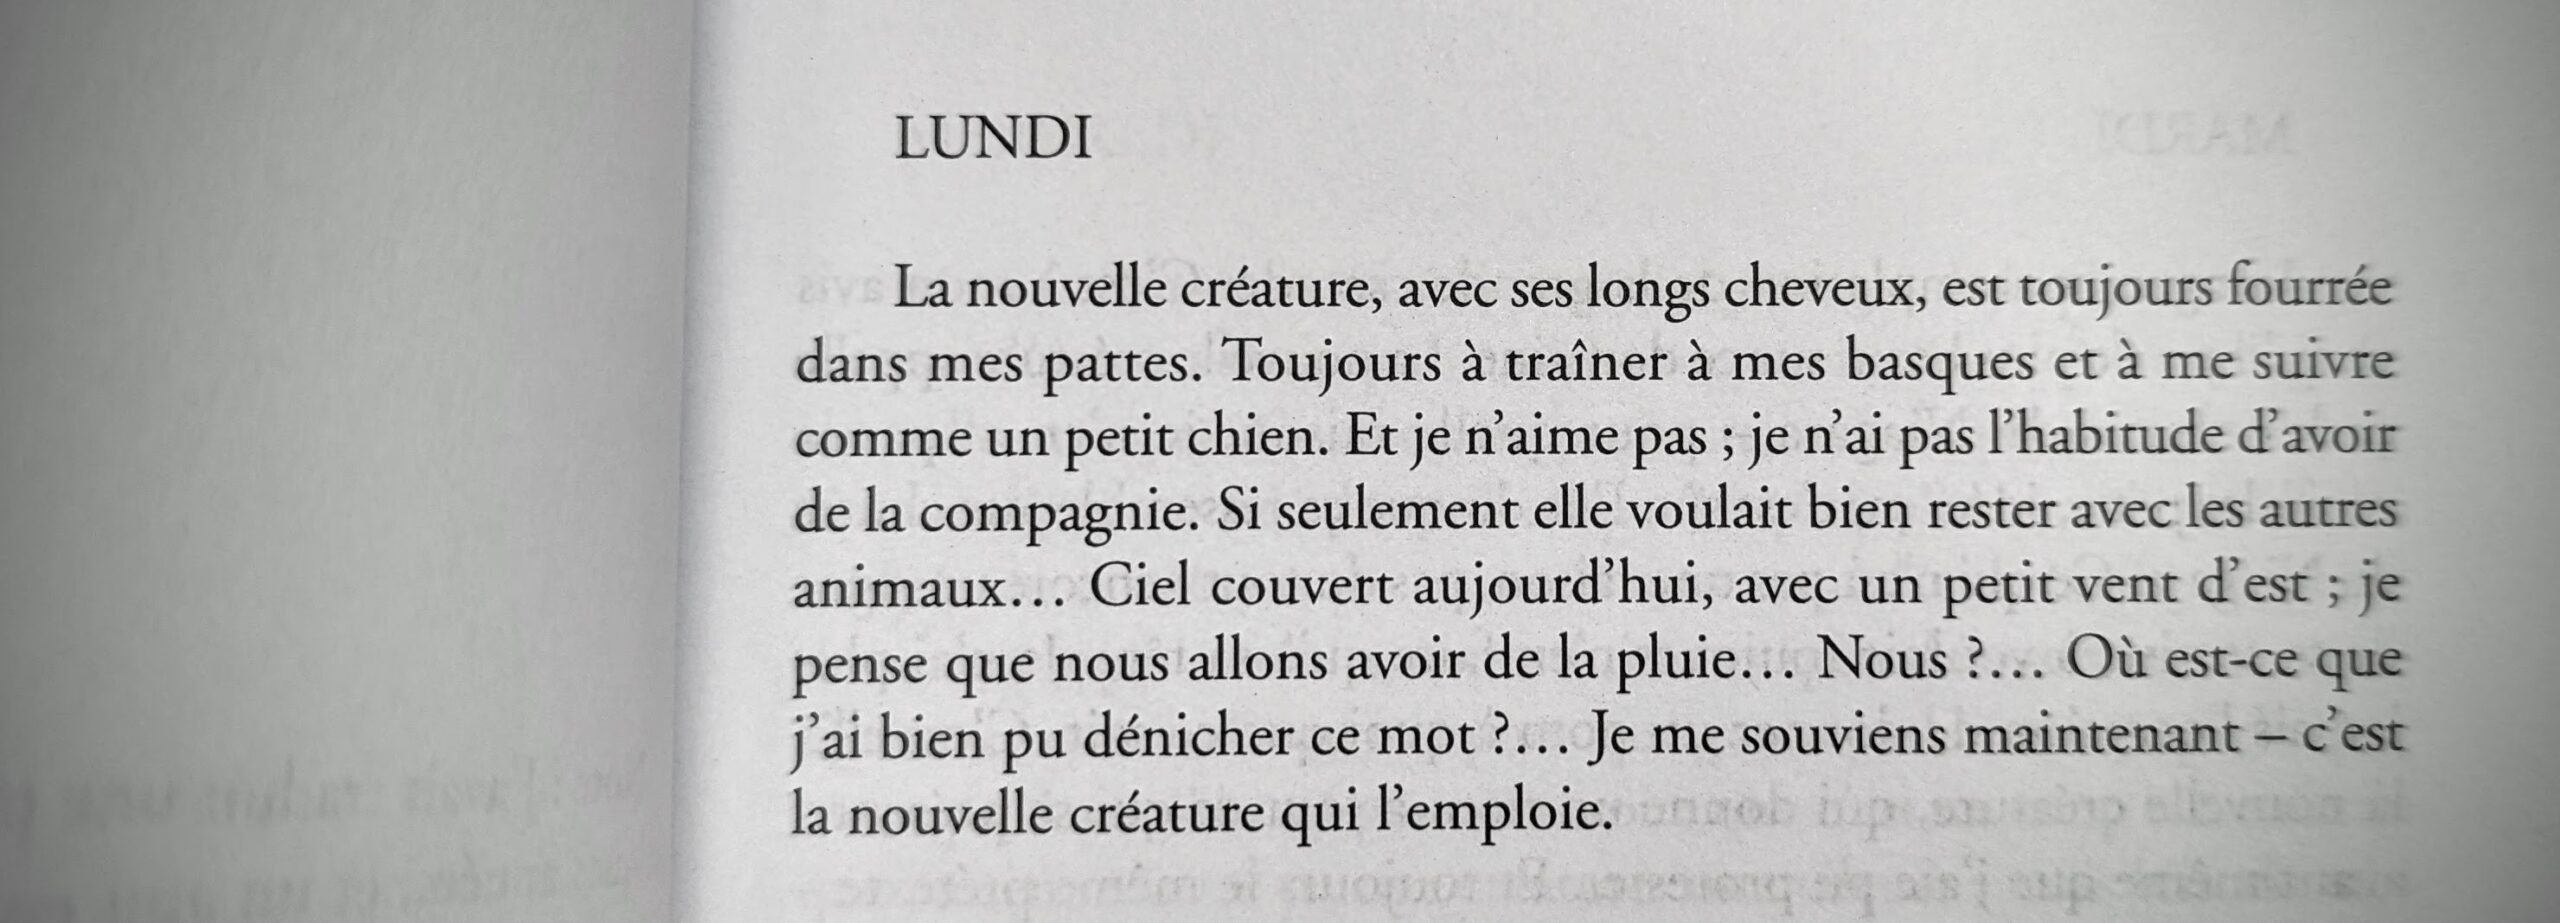 Romain Gary  Citations sympa, Citation, Citation livre